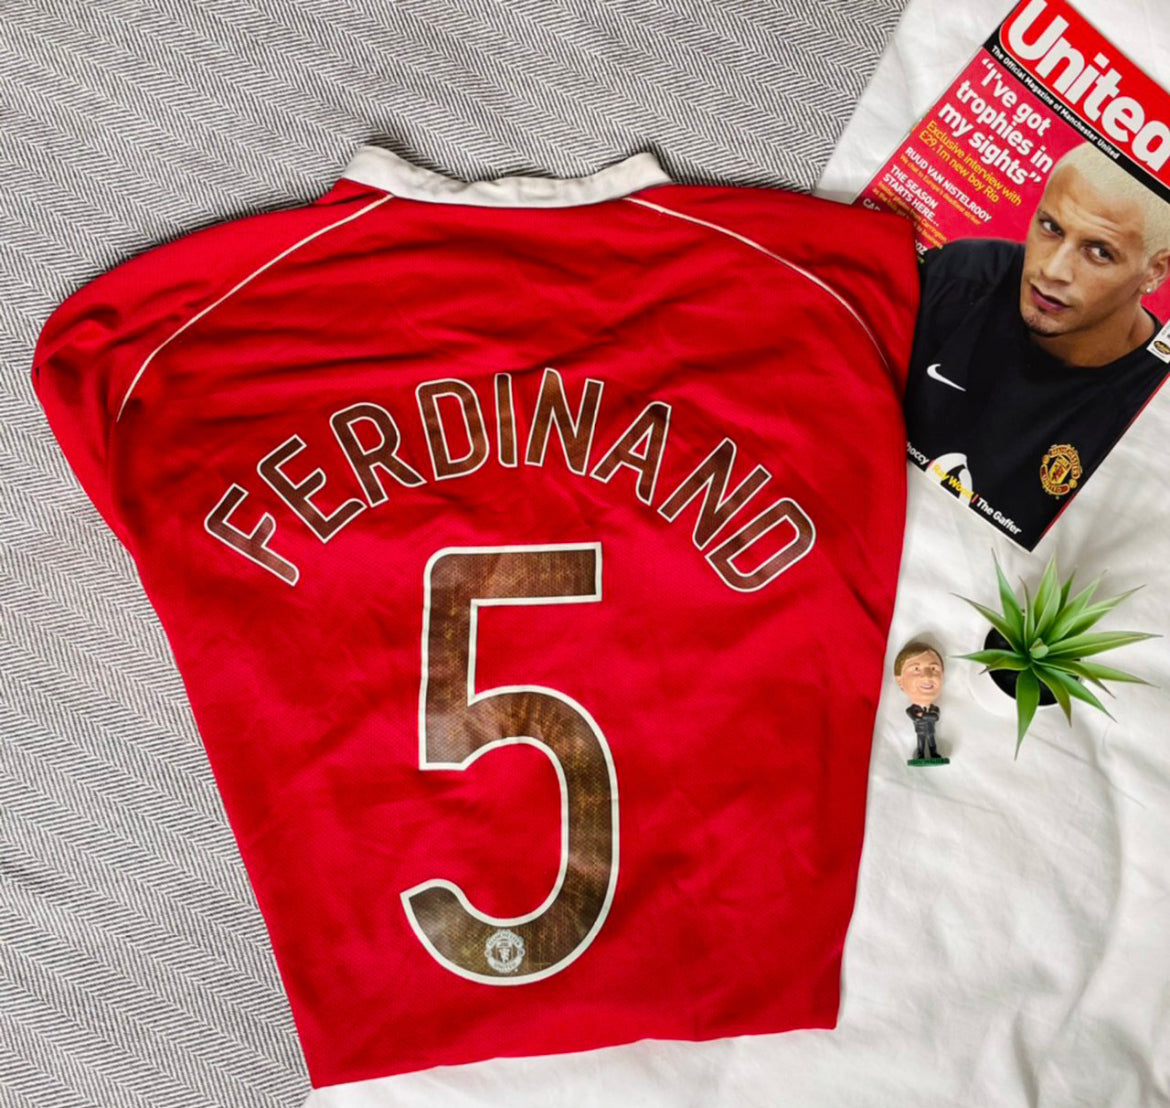 Figure Футболиста Soccerstarz Rio Ferdinand Manchester United (rio  Ferdinand Man Utd) Home Kit (series 1) (73321) - Action Figures - AliExpress